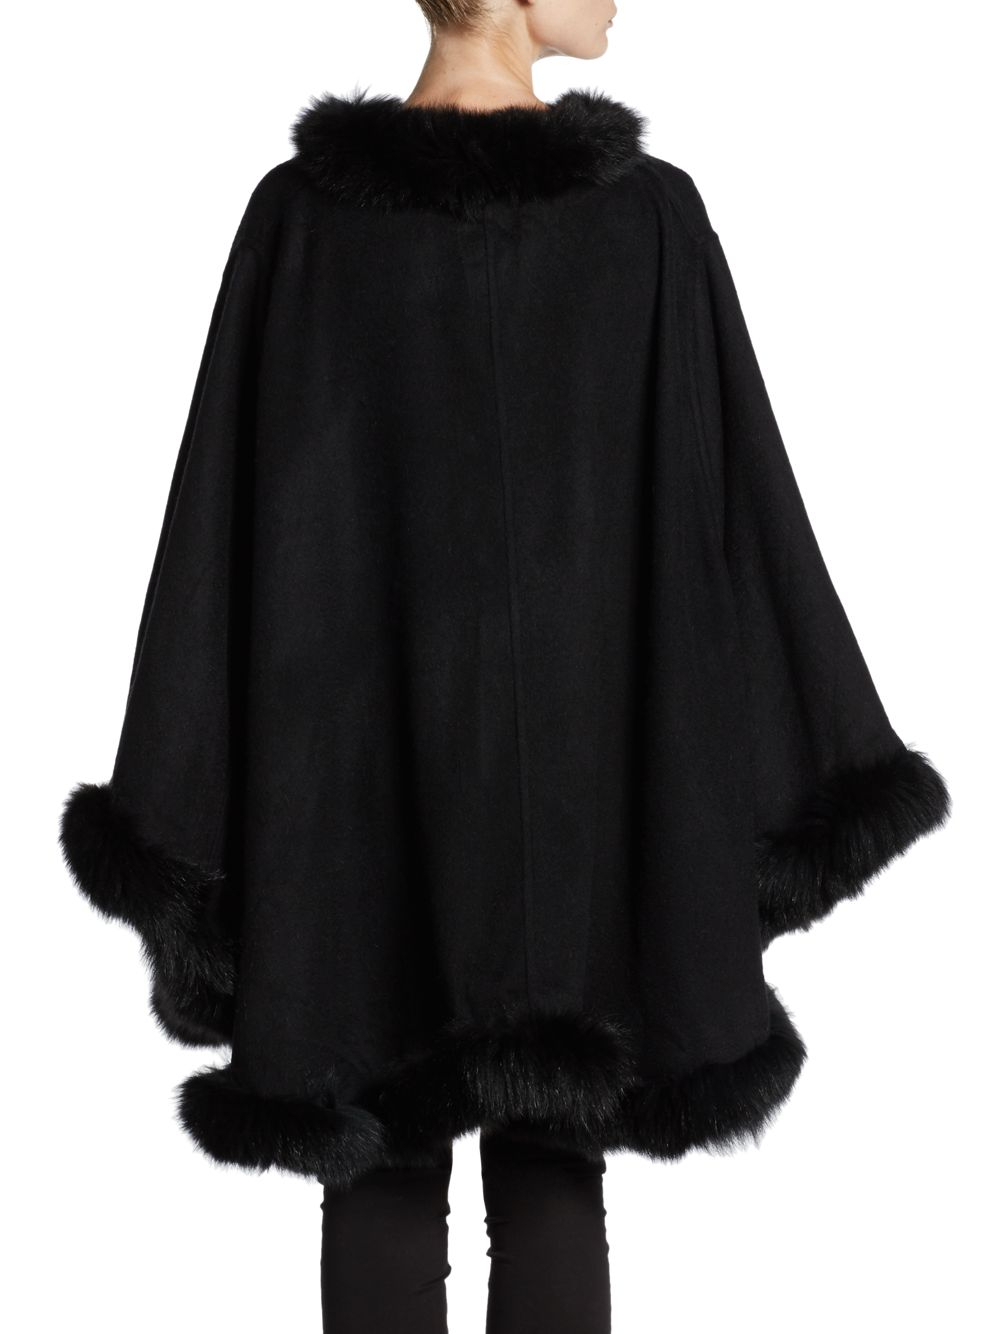 Lyst - La Fiorentina Dyed Fox Fur-trimmed Wool Cape in Black